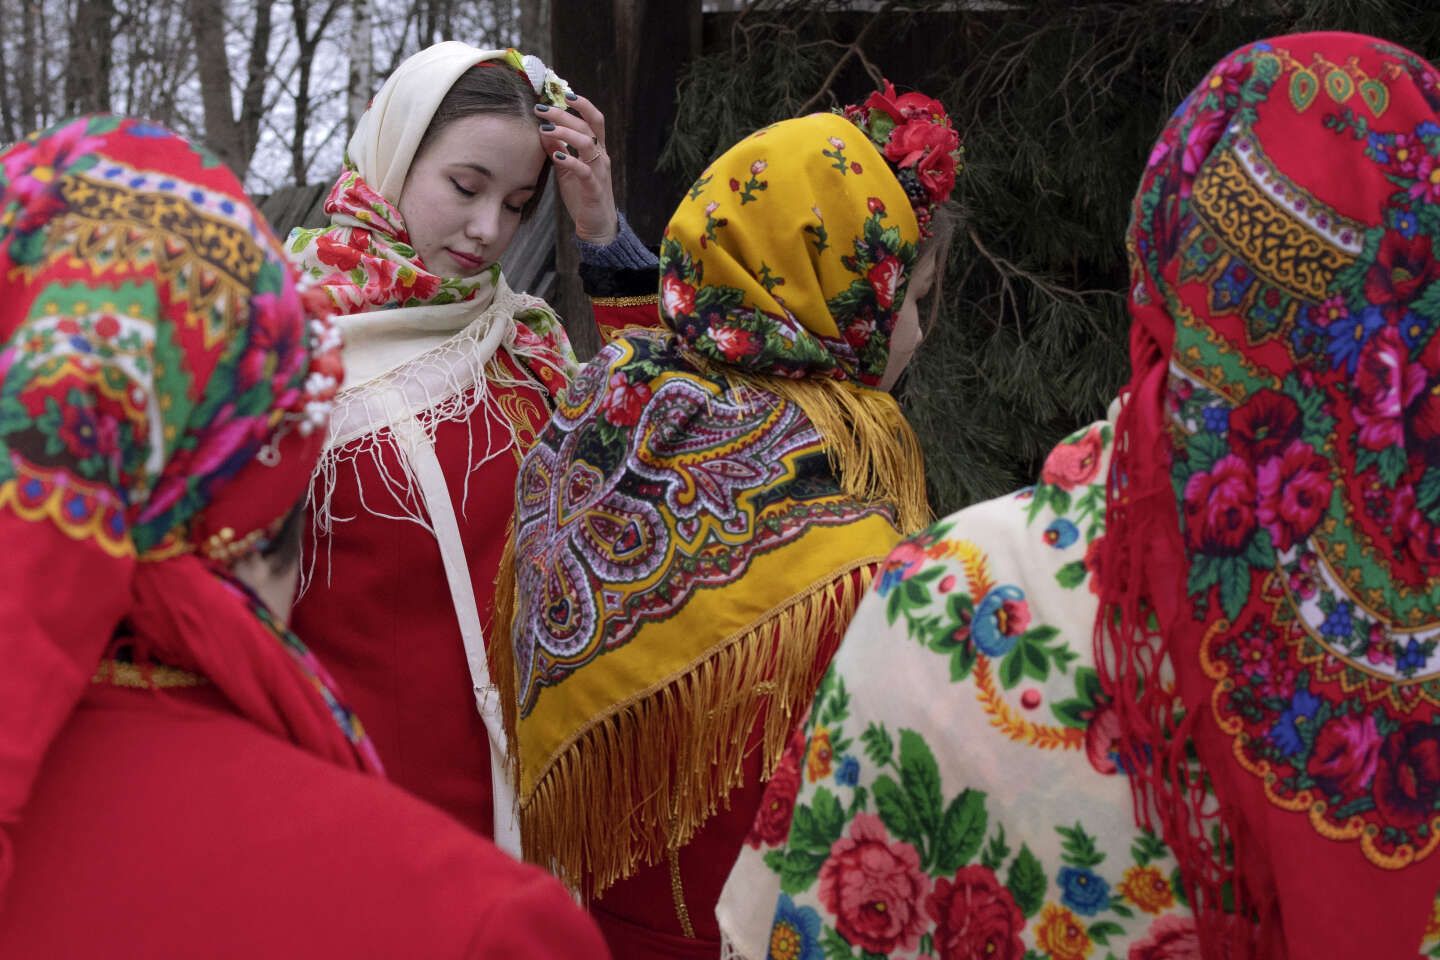 PHOTOS: Kyiv's Rave Culture Dances to Defy Putin's Invasion of Ukraine